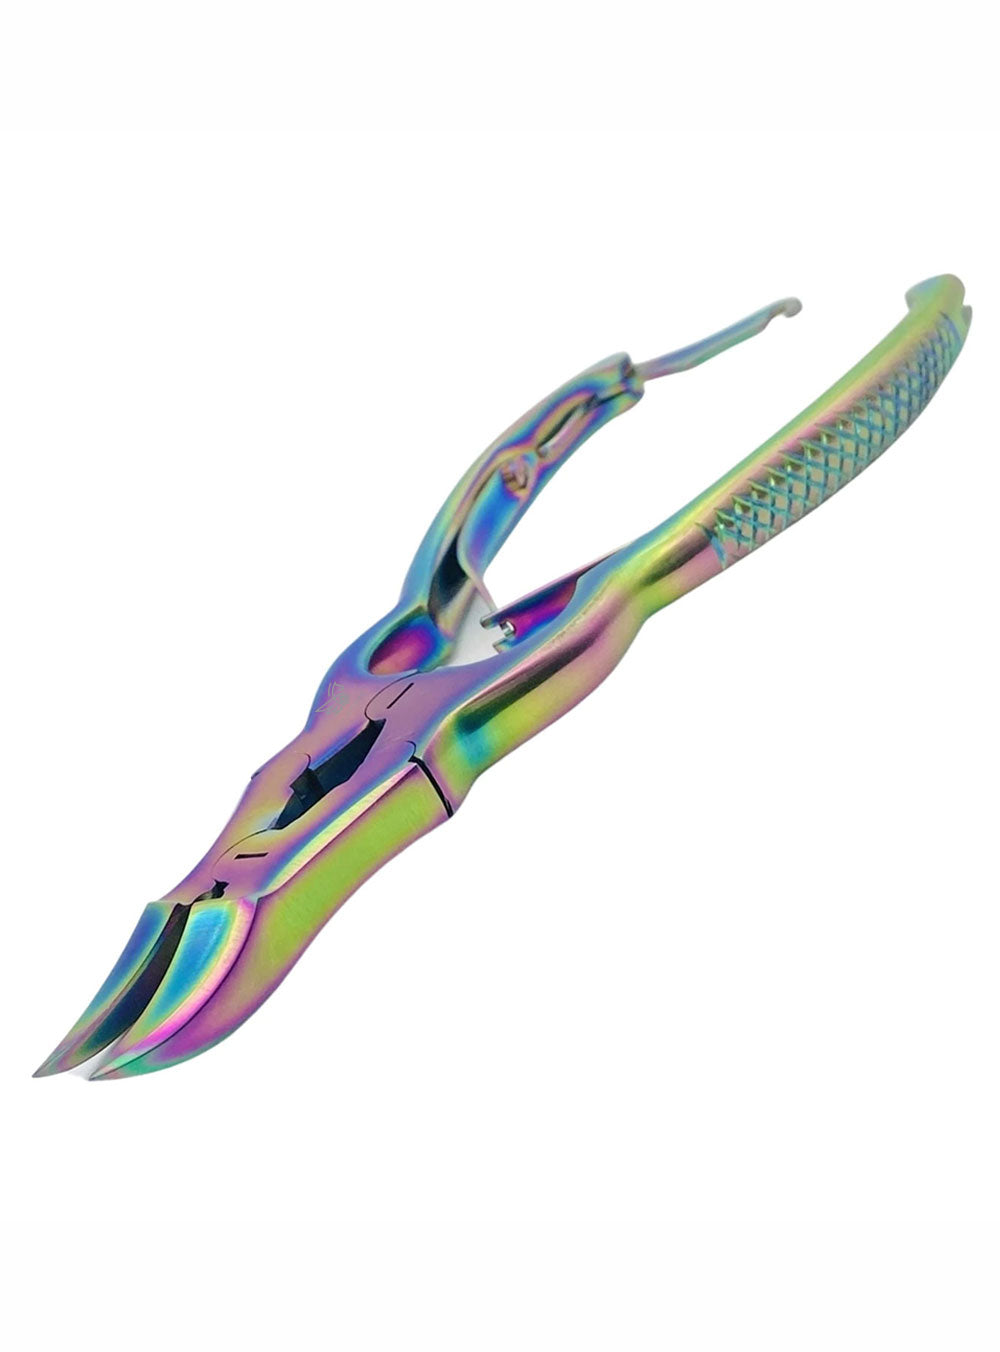 Titanium Cantilever Nipper - Concave Angled Blade